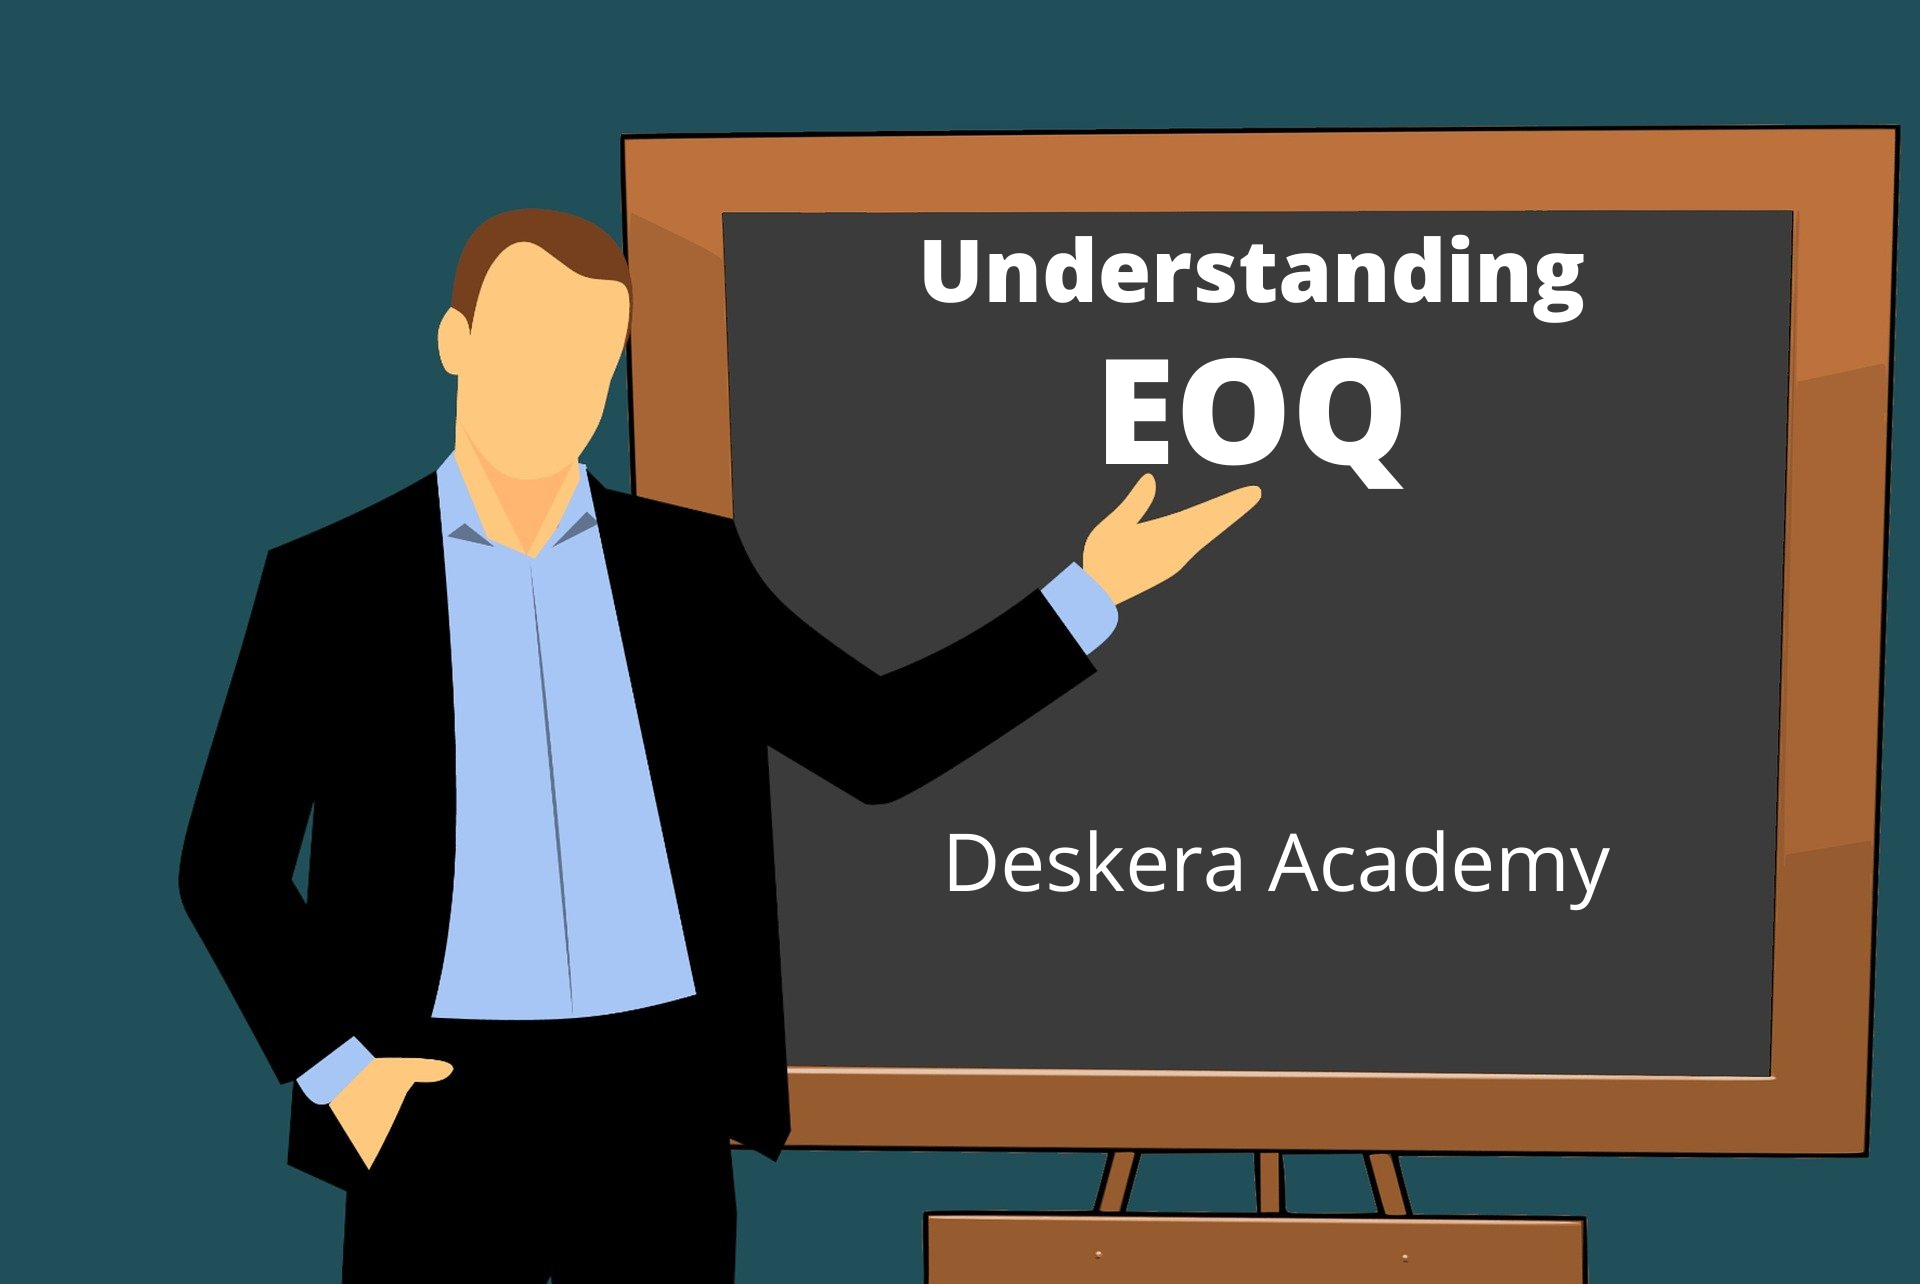 Understanding EOQ - Economic Order Quantity